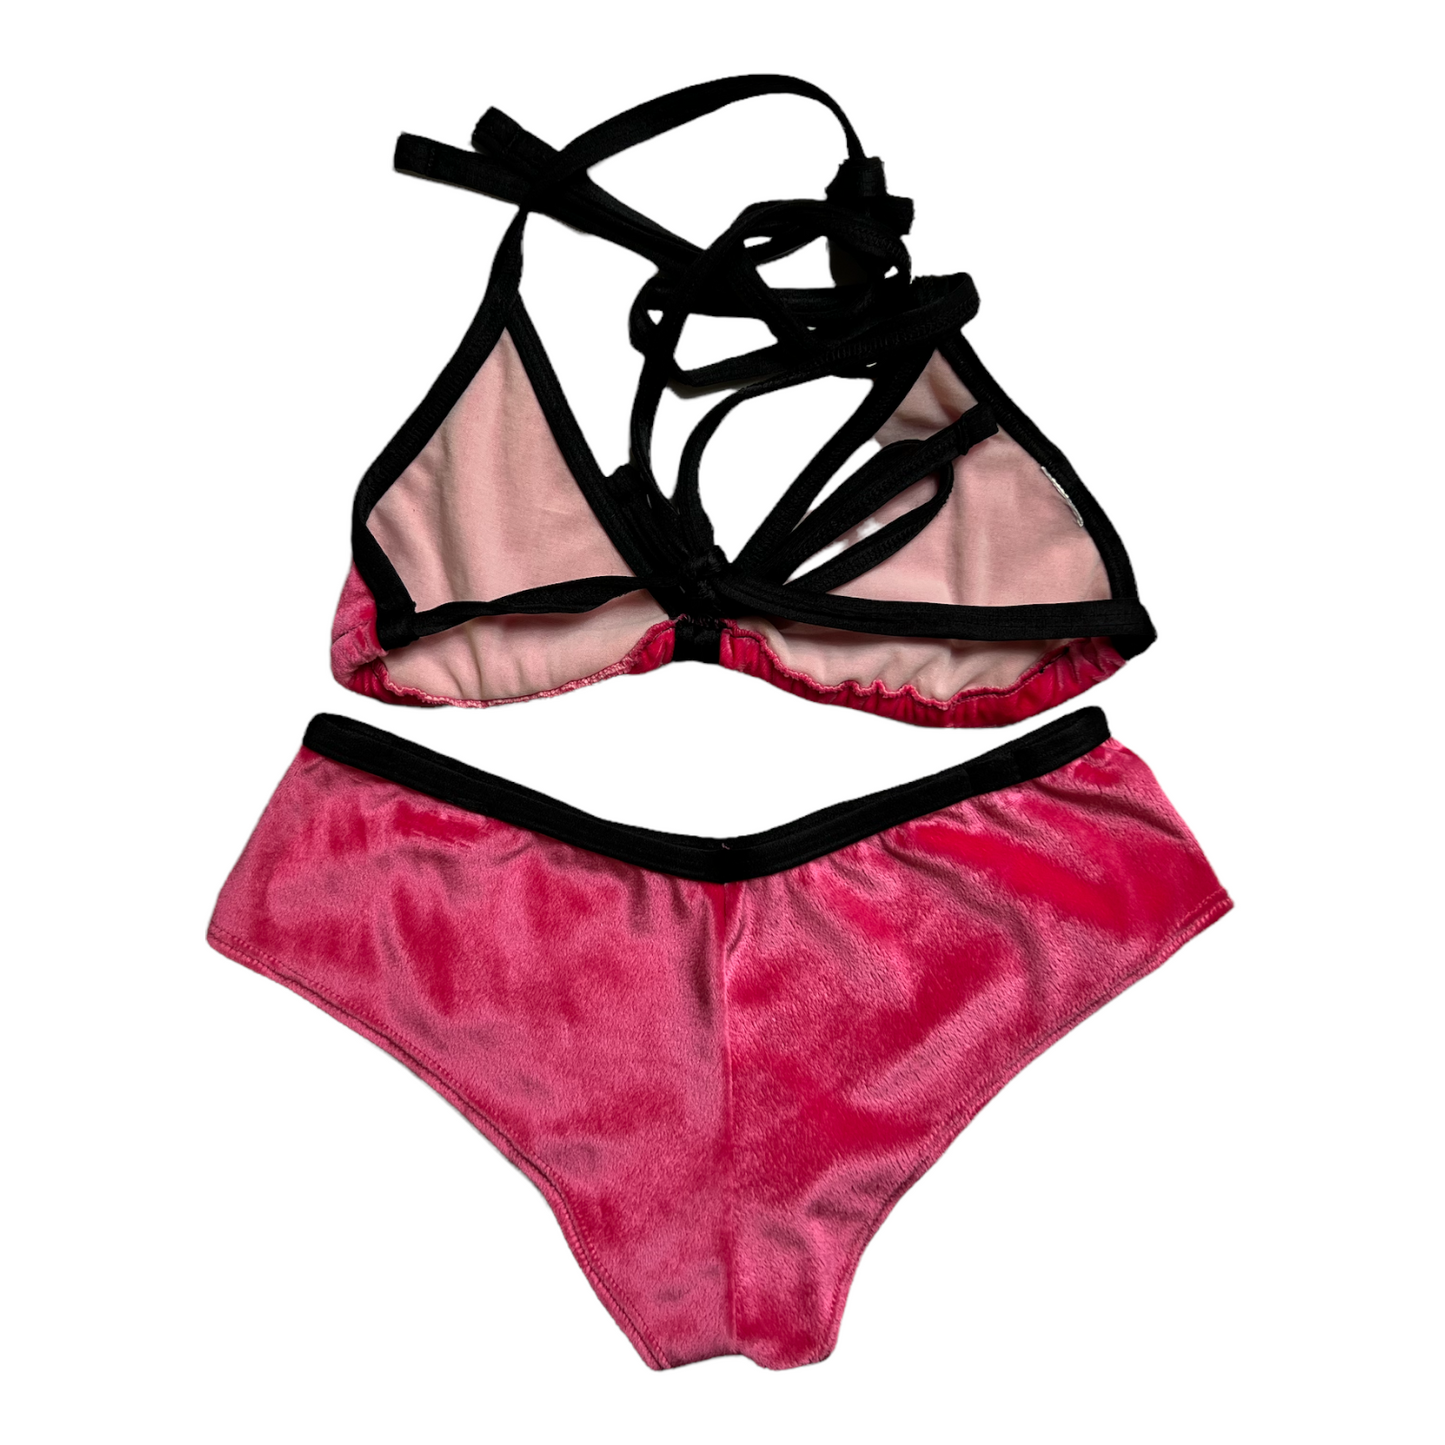 NEW Extreme Gear Pink/Black Velvet Fancy Bikini Top/Cheeky Bottoms Set Sz M/S